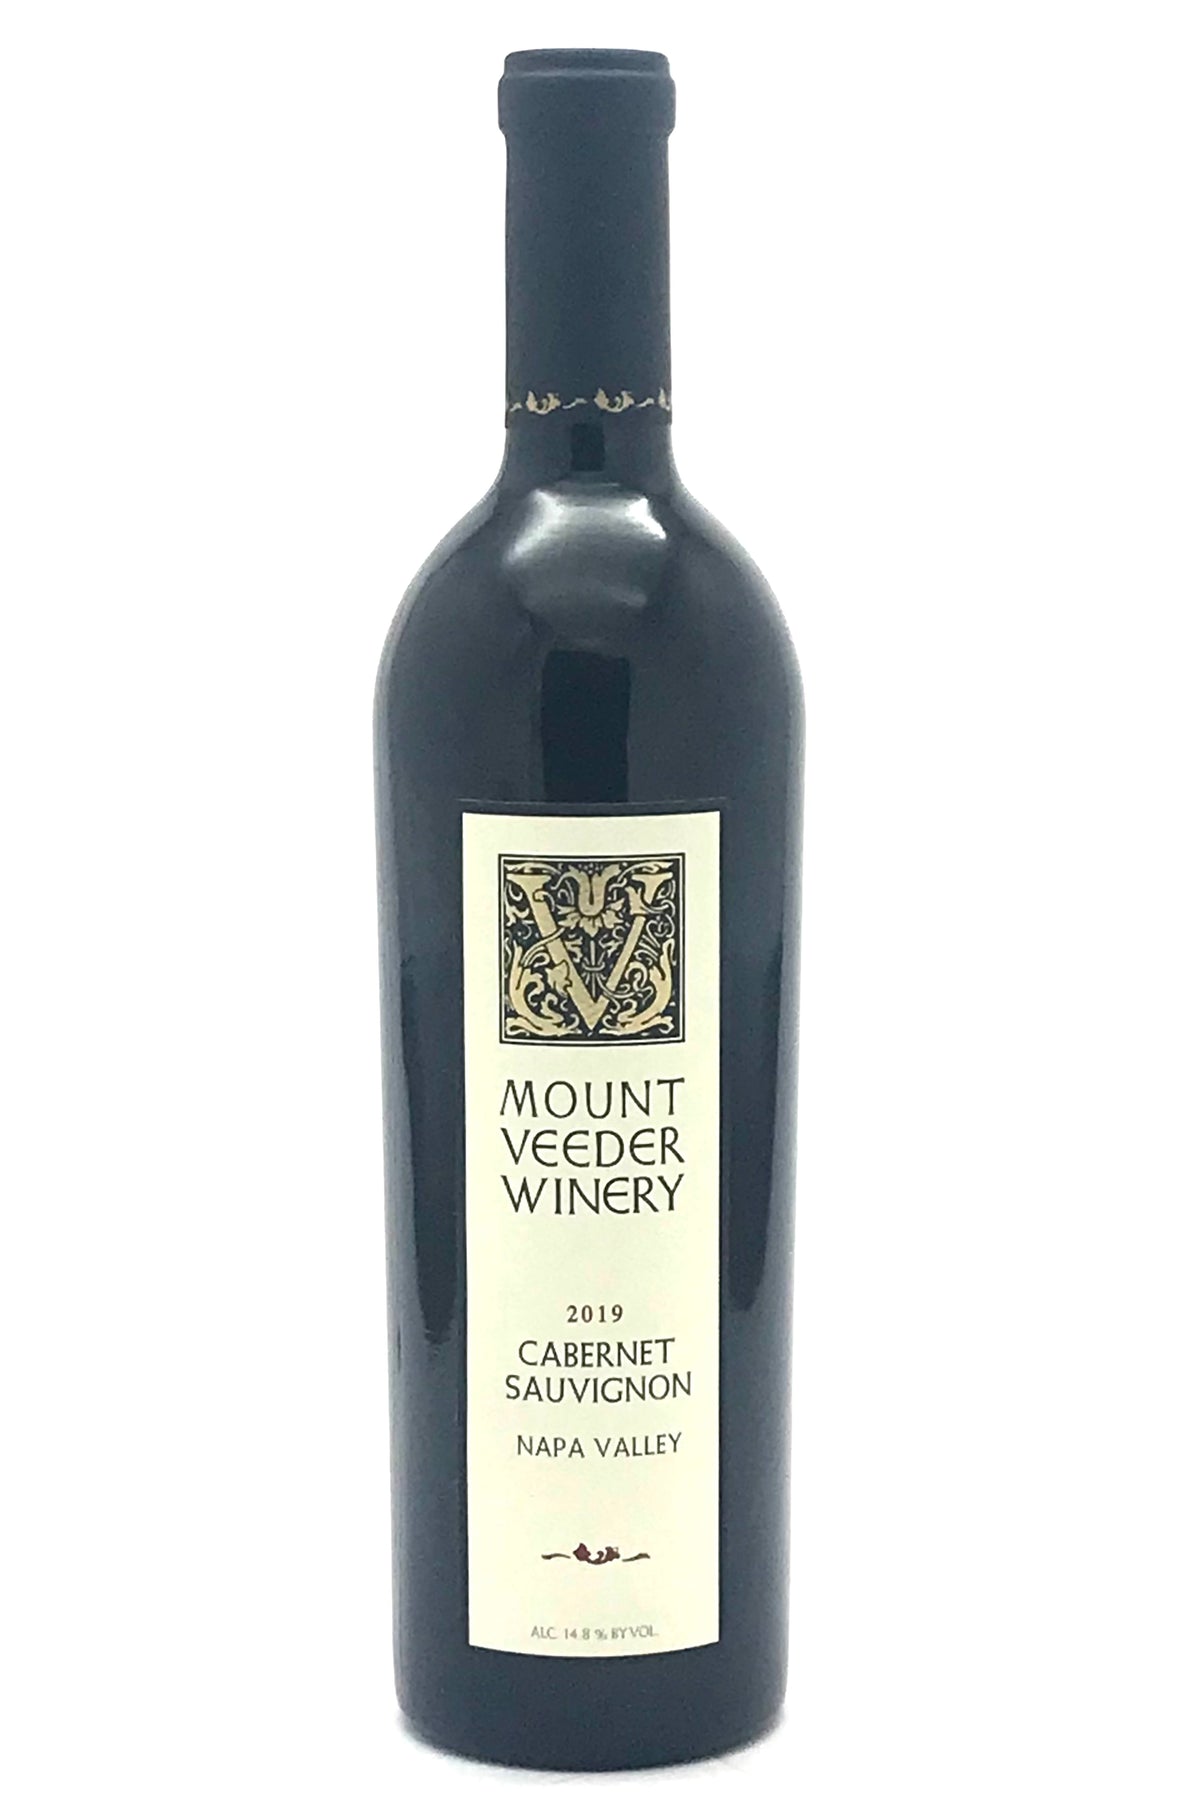 Mount Veeder Winery 2019 Cabernet Sauvignon Napa Valley